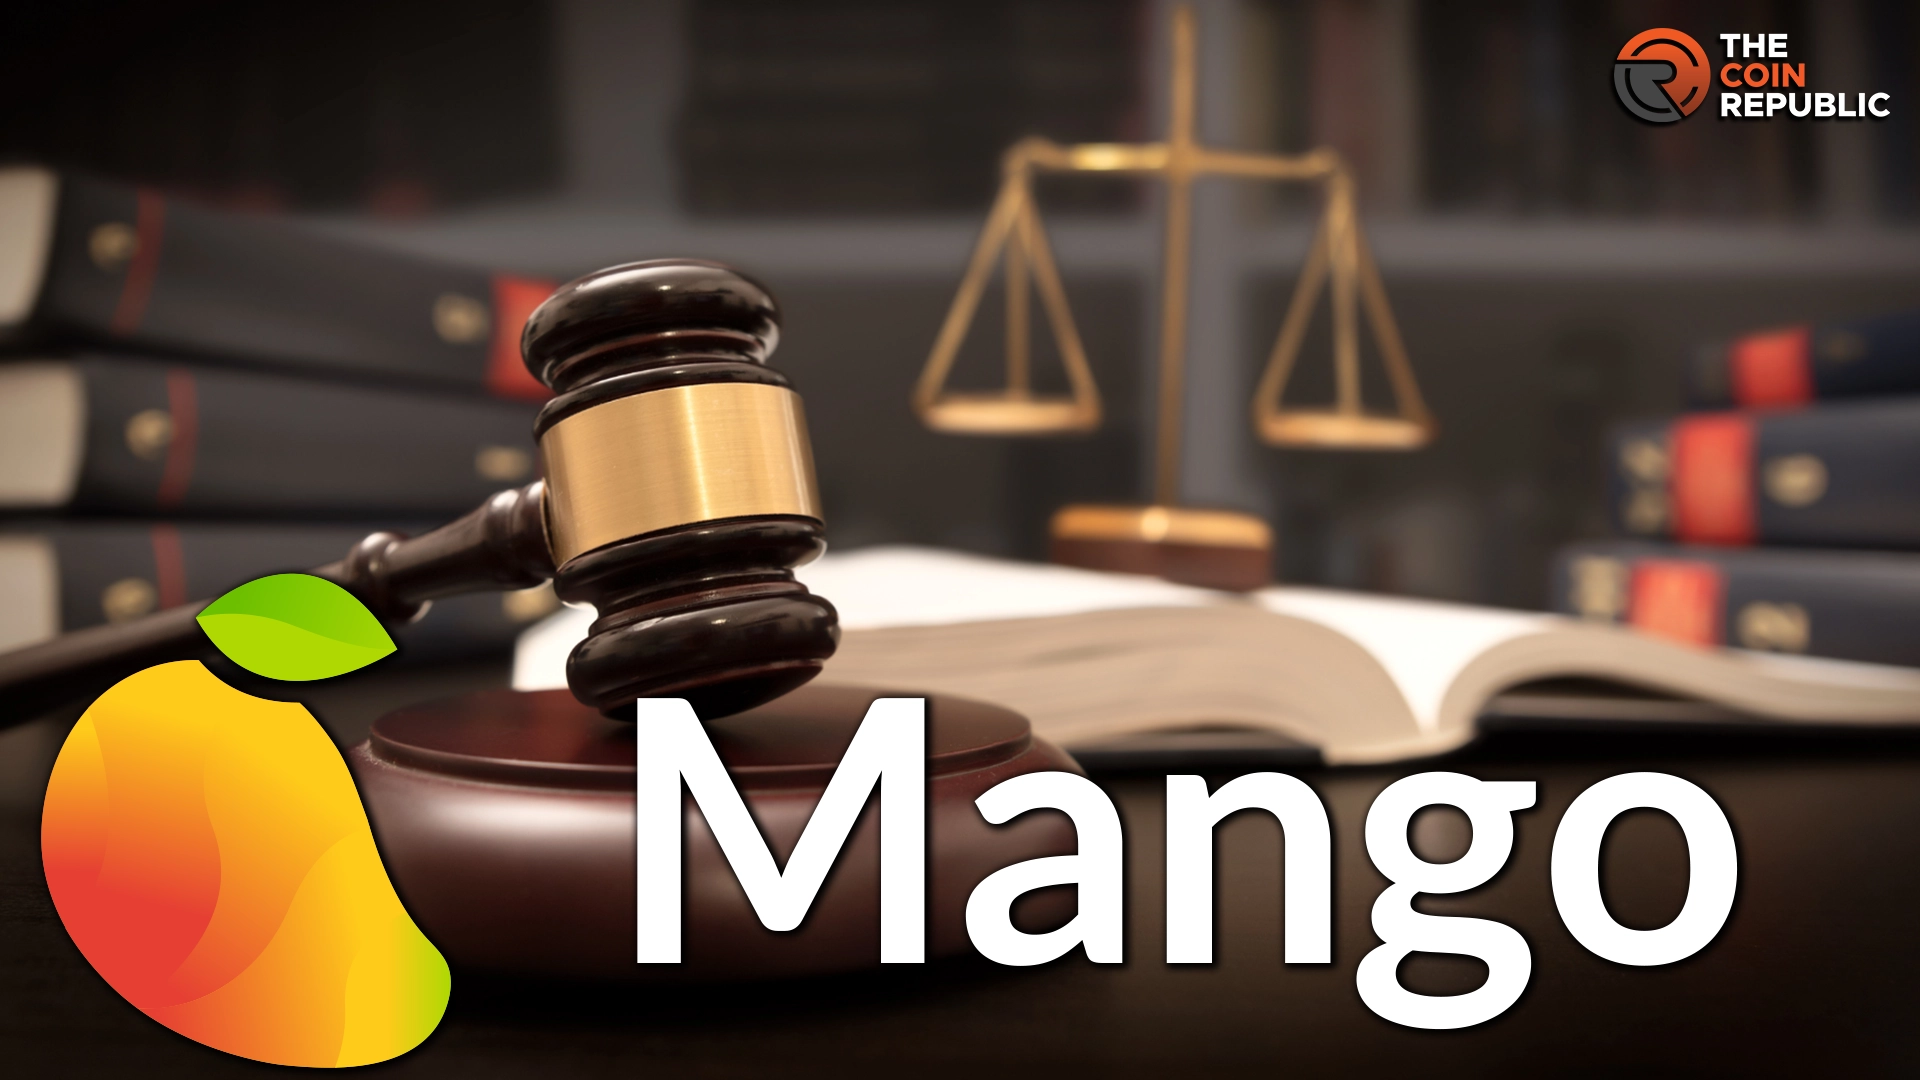 Mango Markets Exploiter Found Guilty Of Fraud & Manipulation